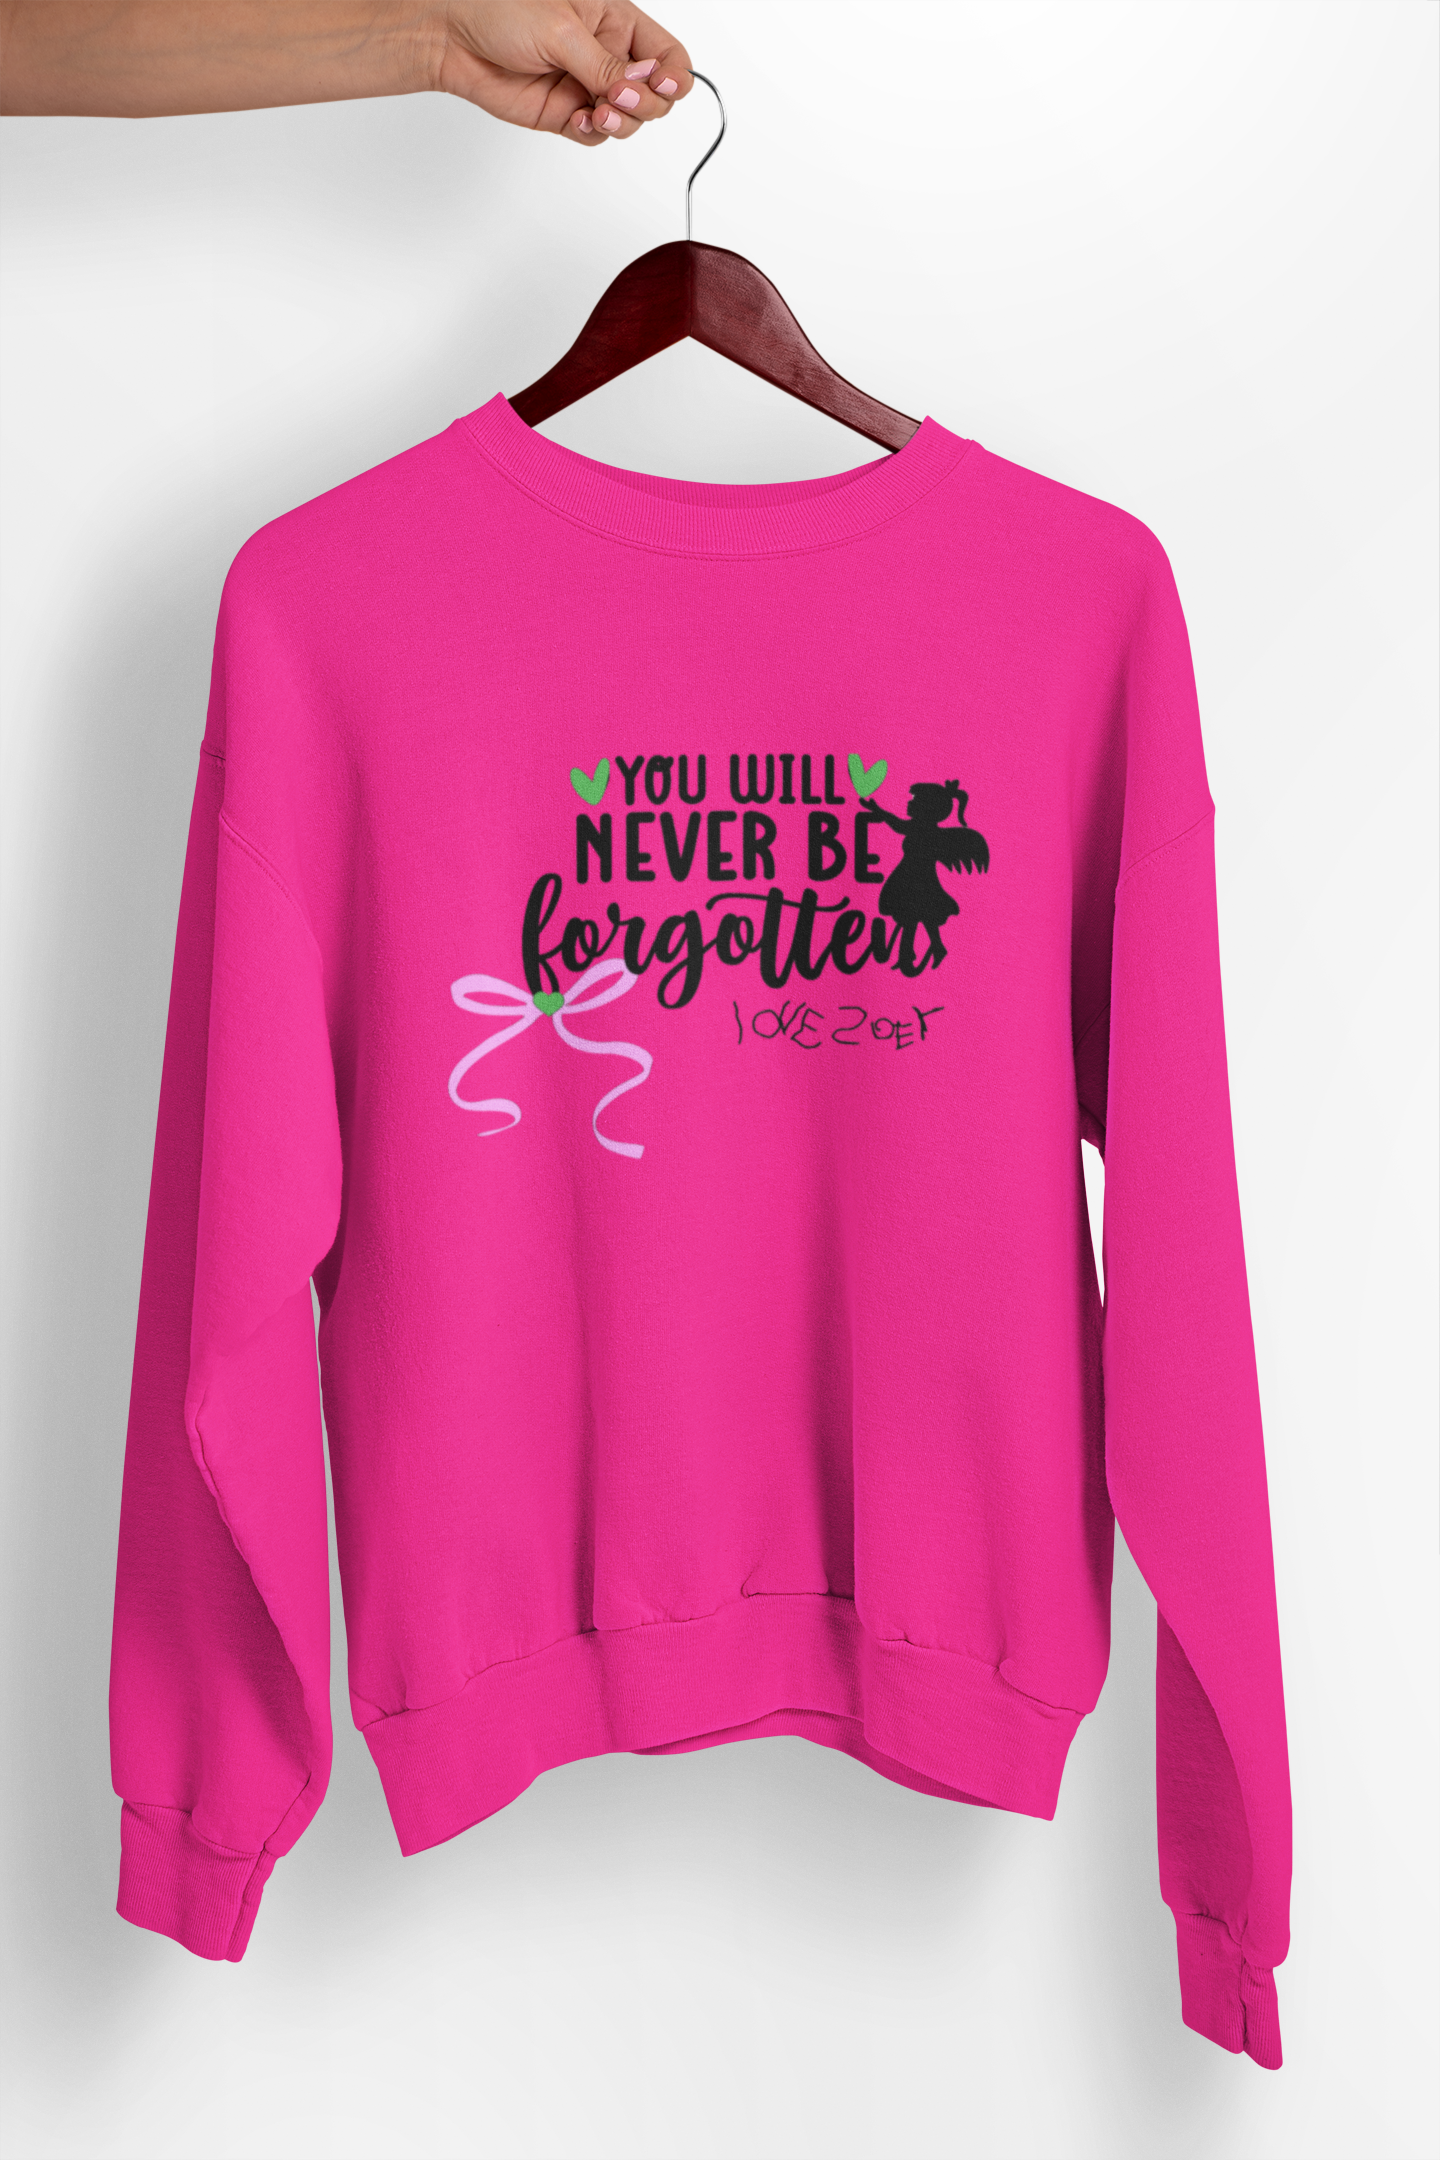 You will never be forgotten Crewneck Sweatshirt - Pink